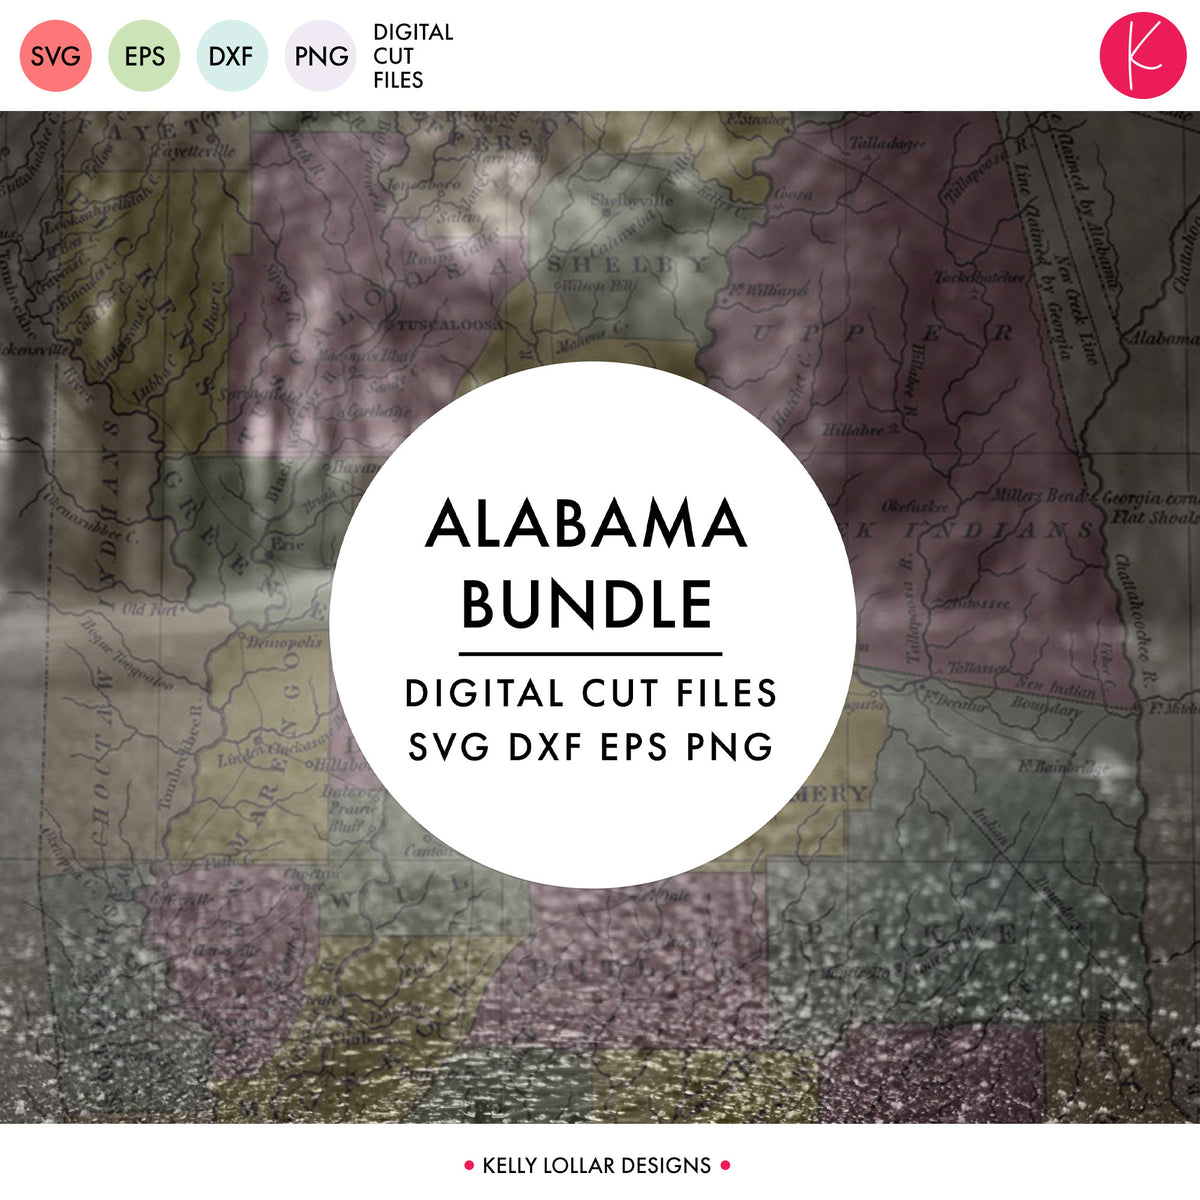 Alabama State Bundle | SVG DXF EPS PNG Cut Files